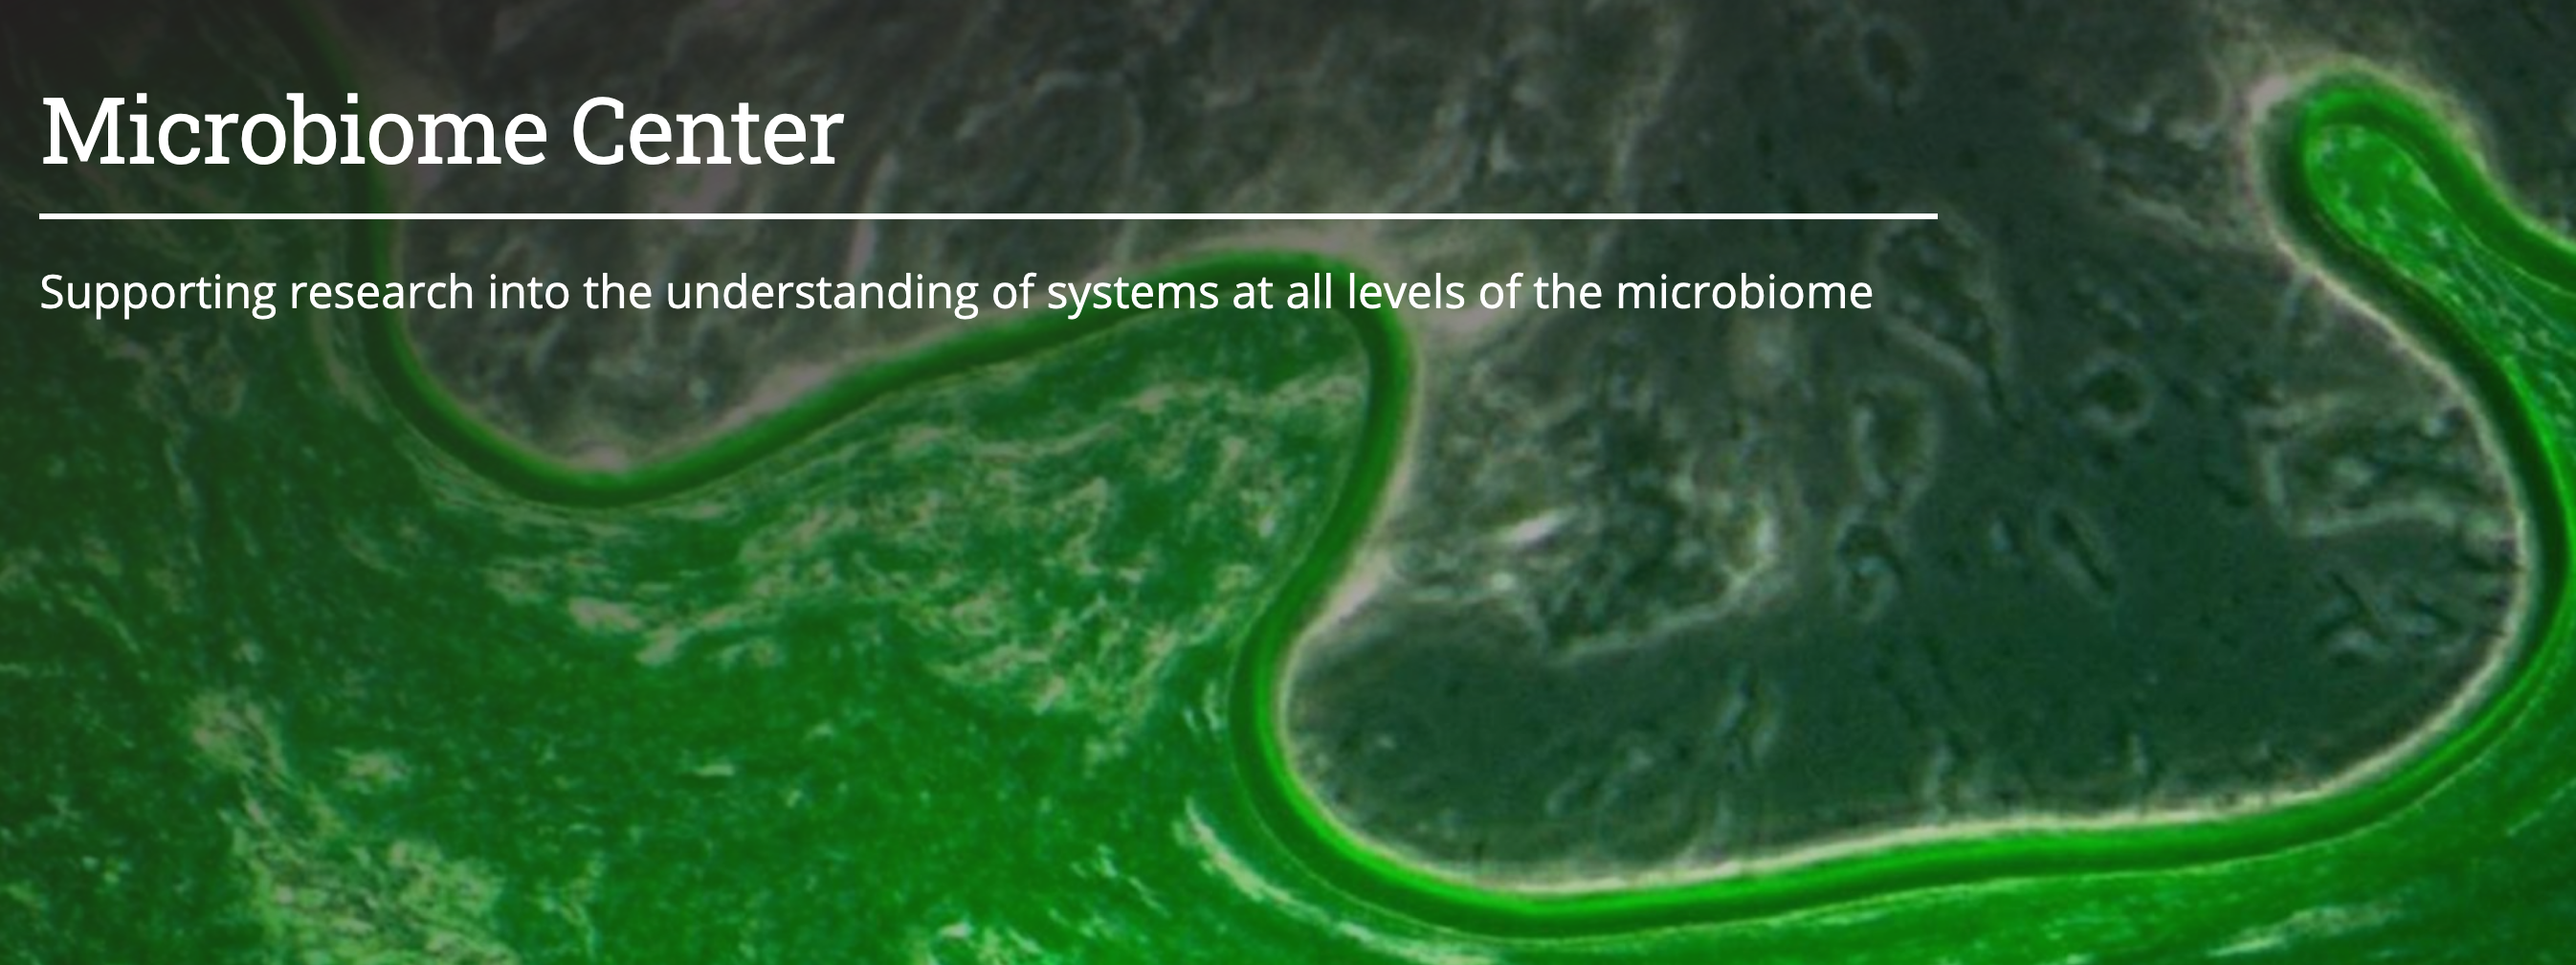 Microbiome Center image